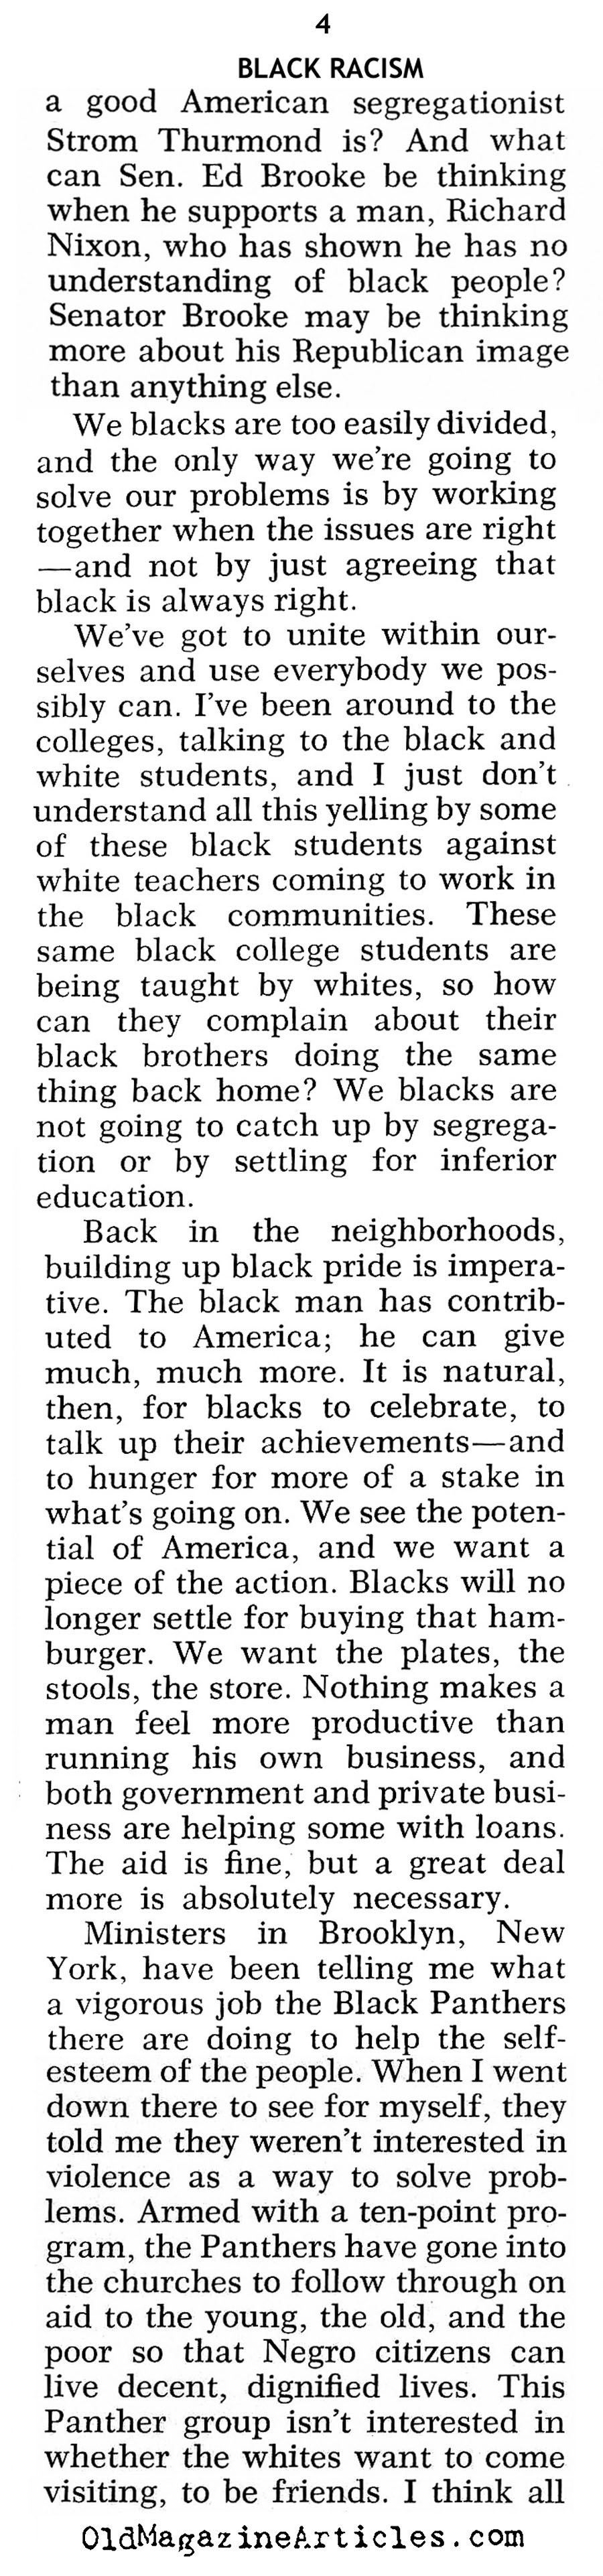 Black Racism (Pageant Magazine, 1969)